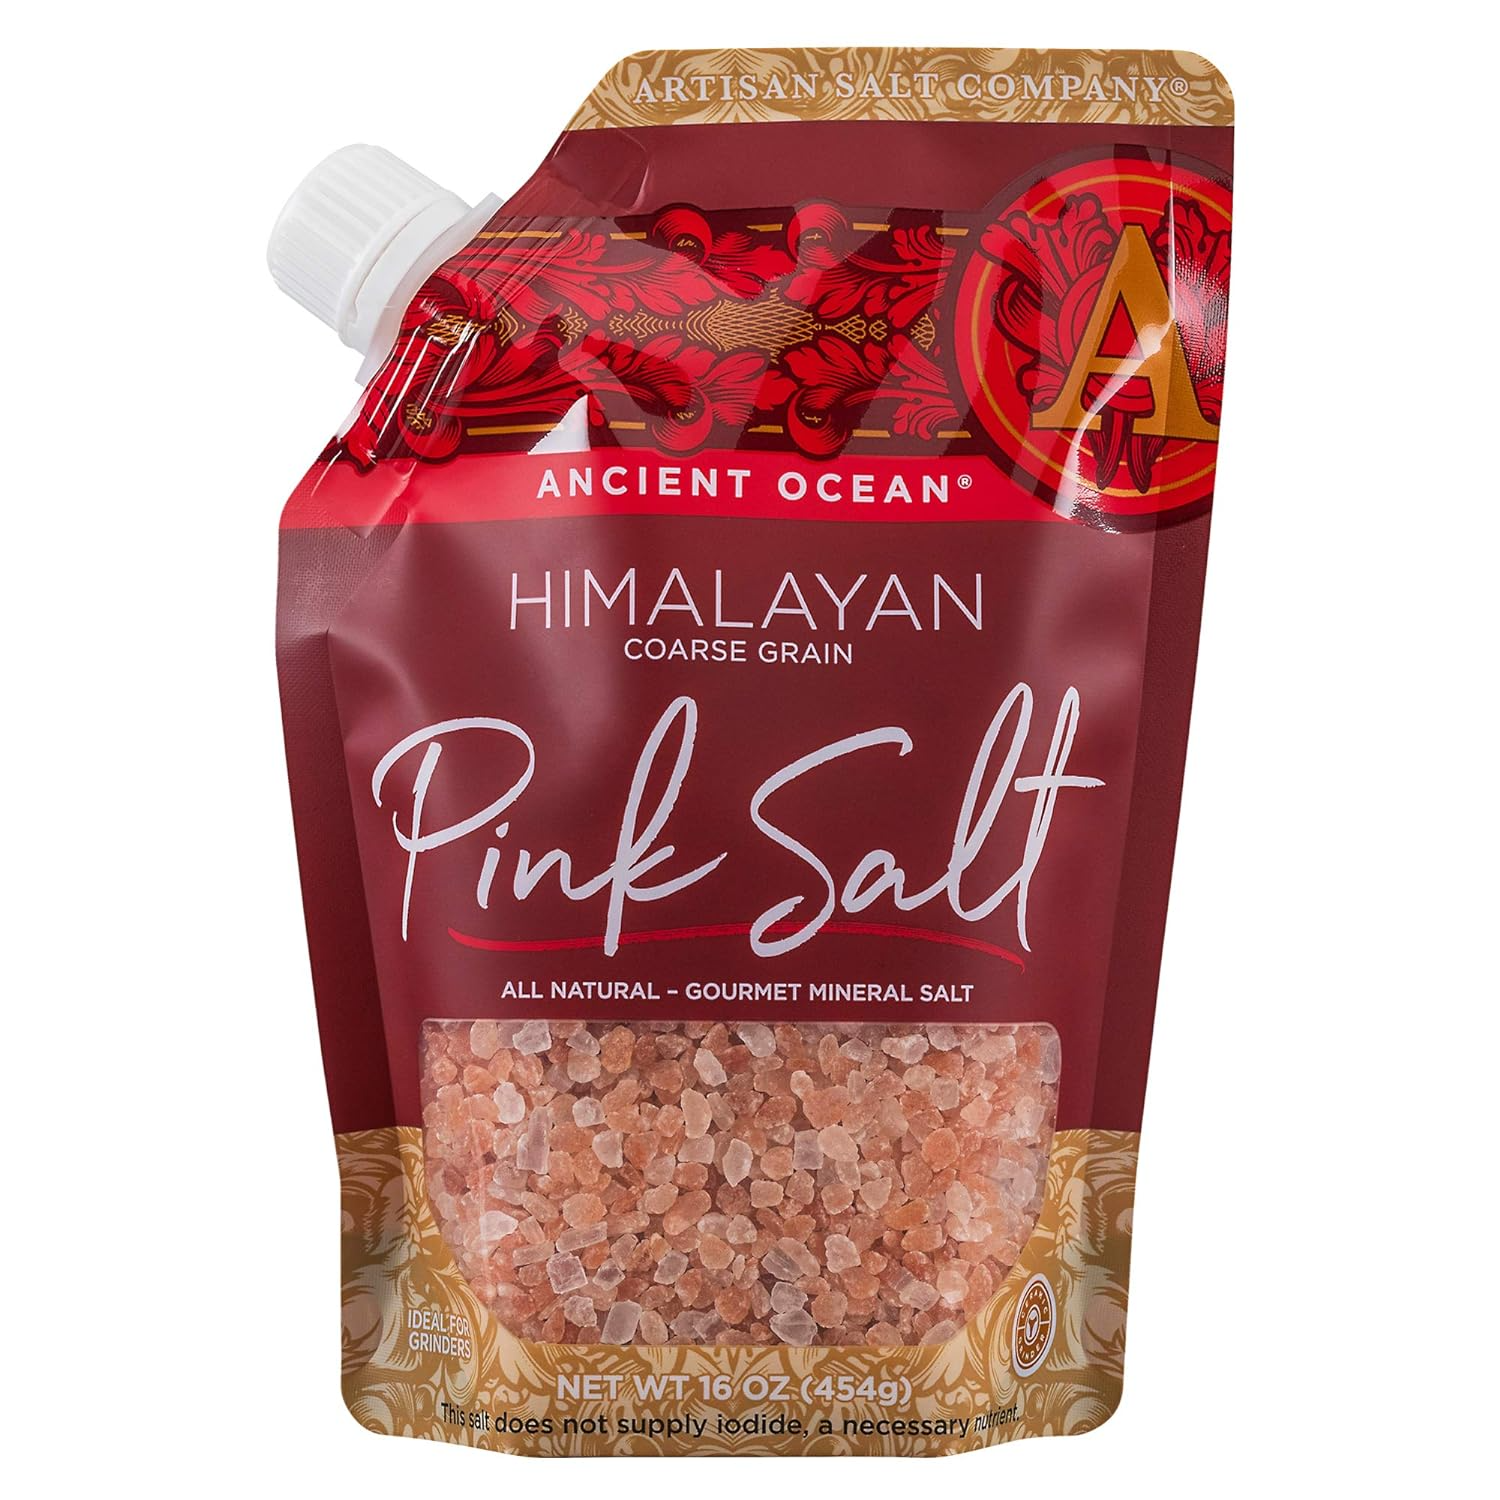 SALTWORKS Artisan Salt Company Alaea Red Hawaiian-style Sea Salt, Fine Grain, Pour Spout Pouch, 16 Ounce